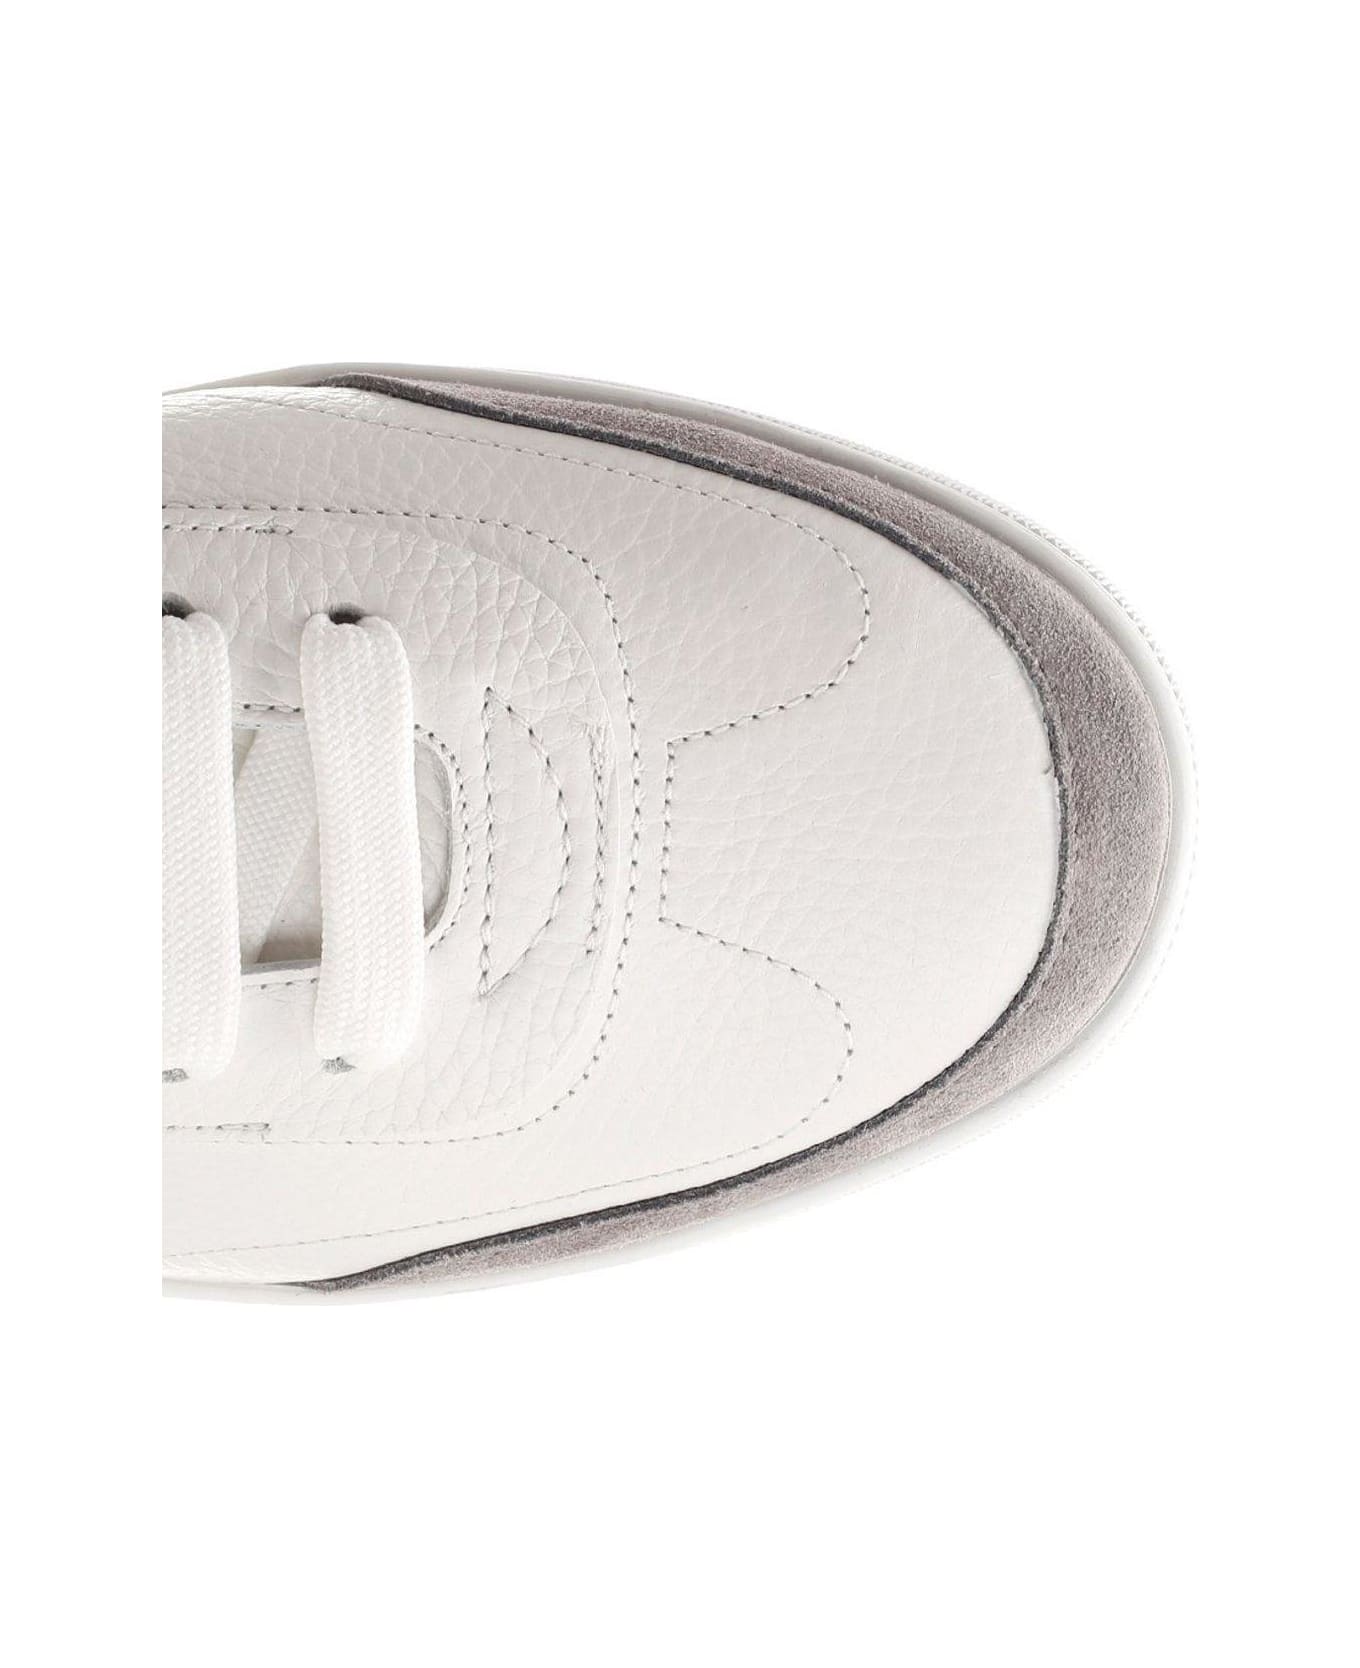 Dolce & Gabbana Stripe-detailed Round Toe Sneakers - WHITE